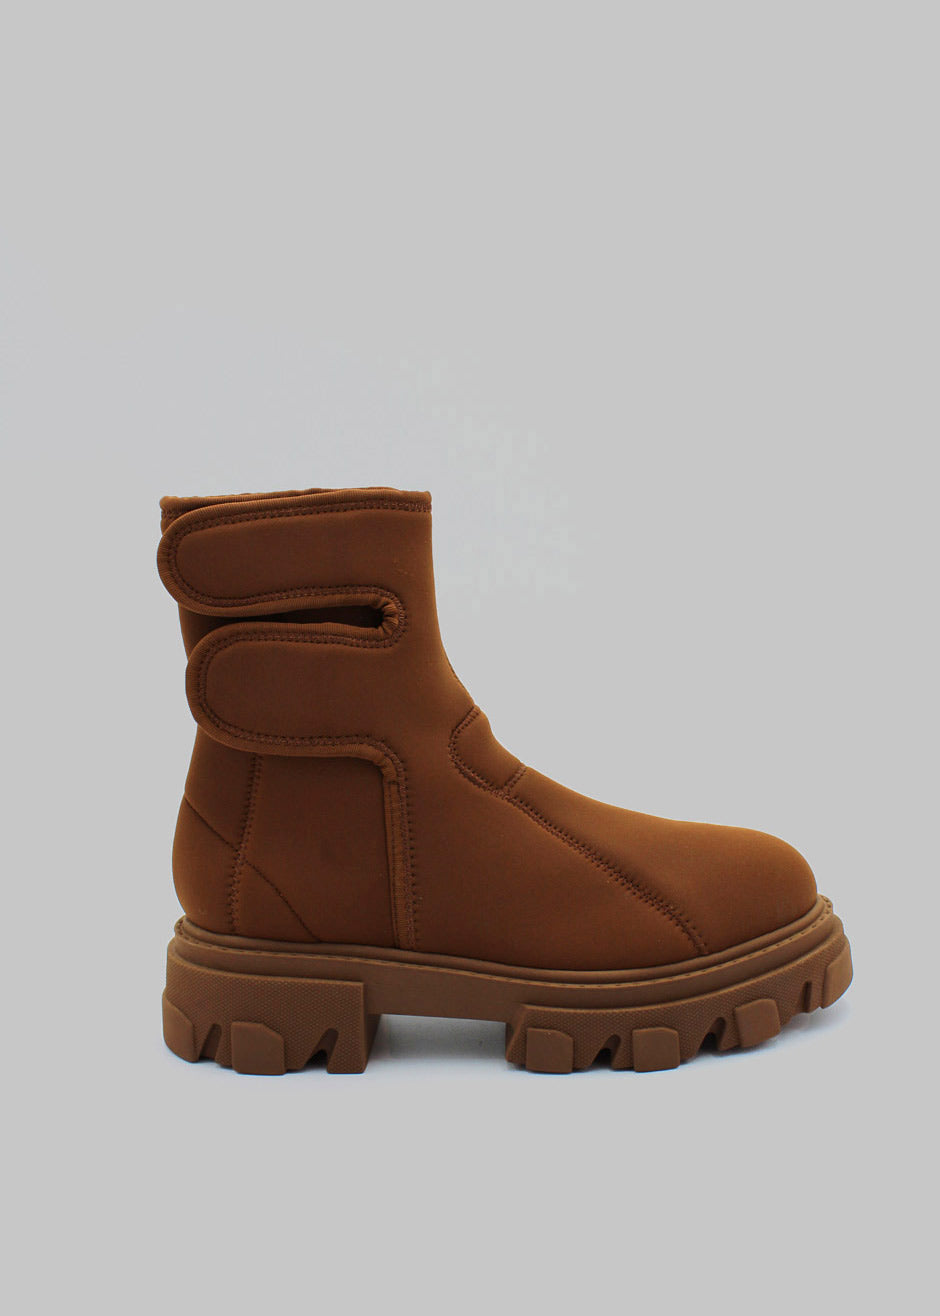 Gia Borghini 9 Scuba Boots - Brown - 7